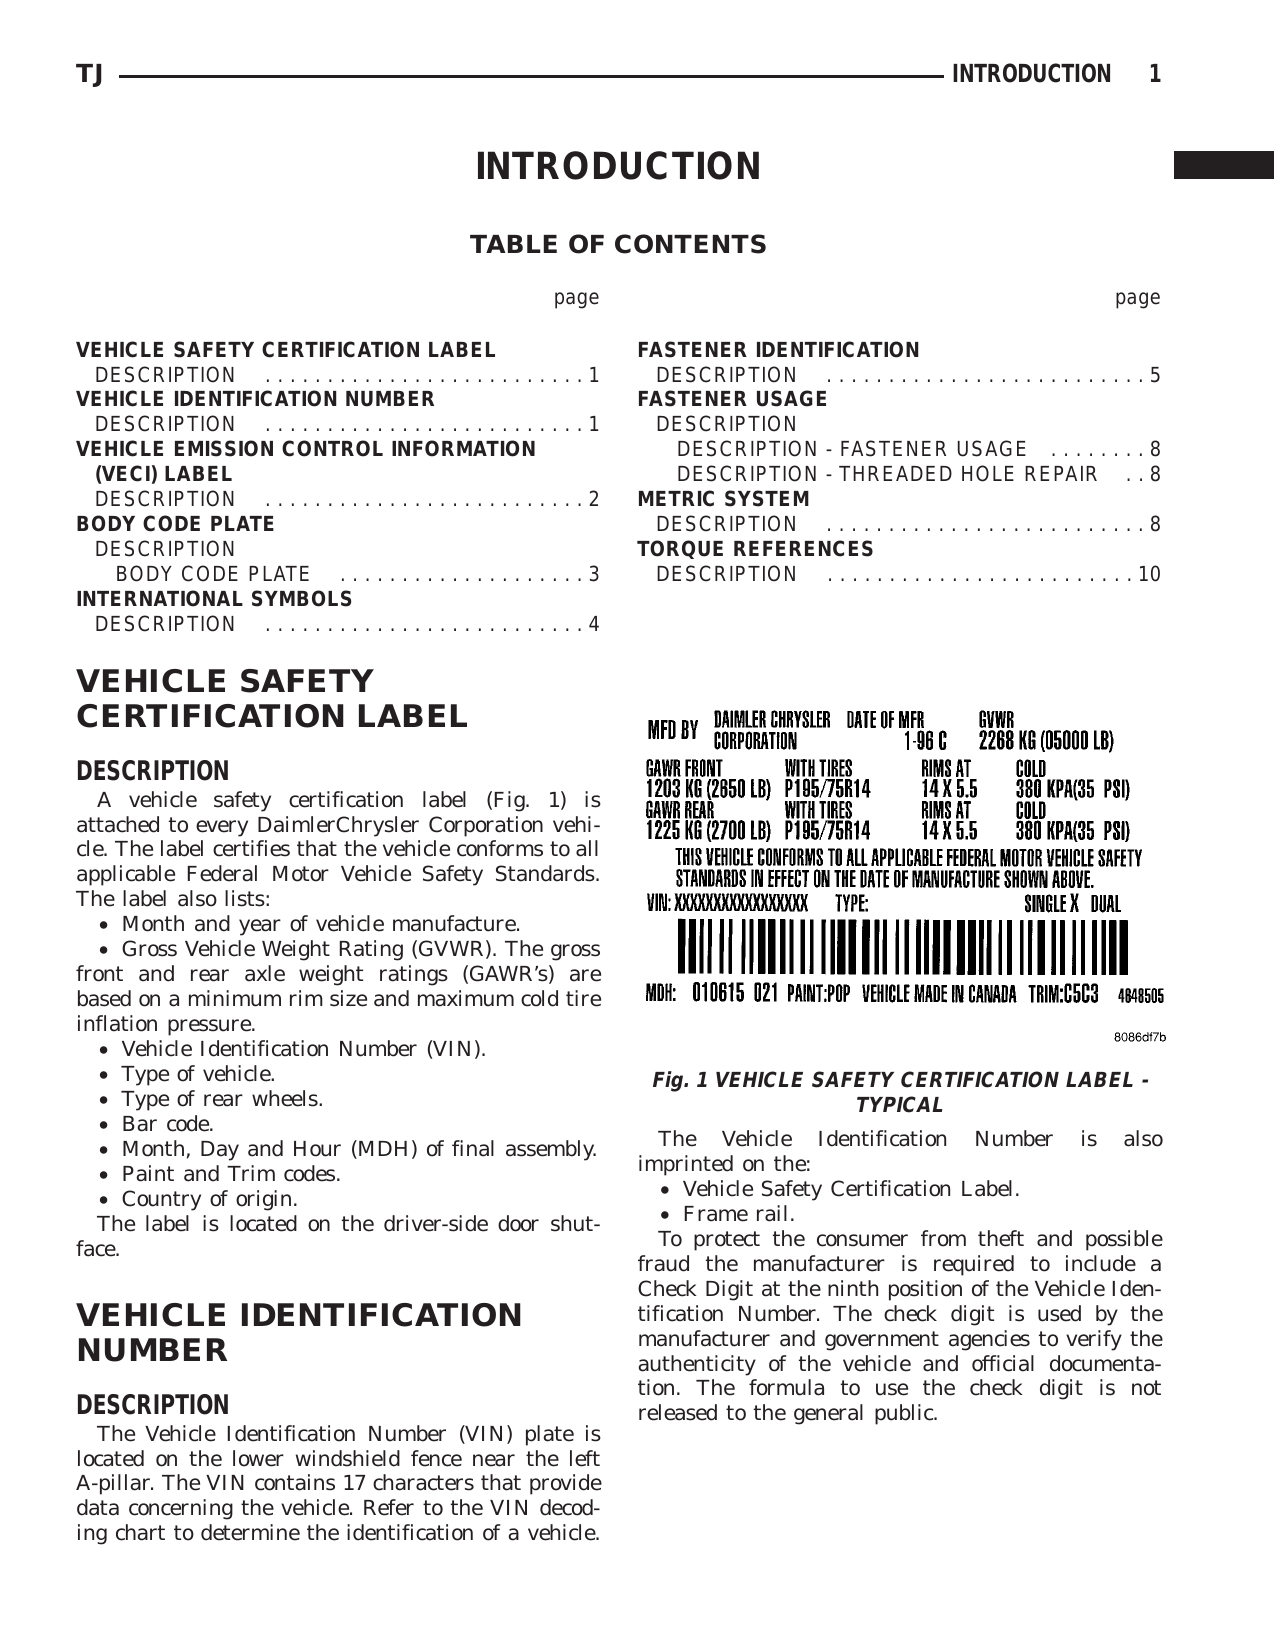 2003 Jeep Wrangler shop manual Preview image 2